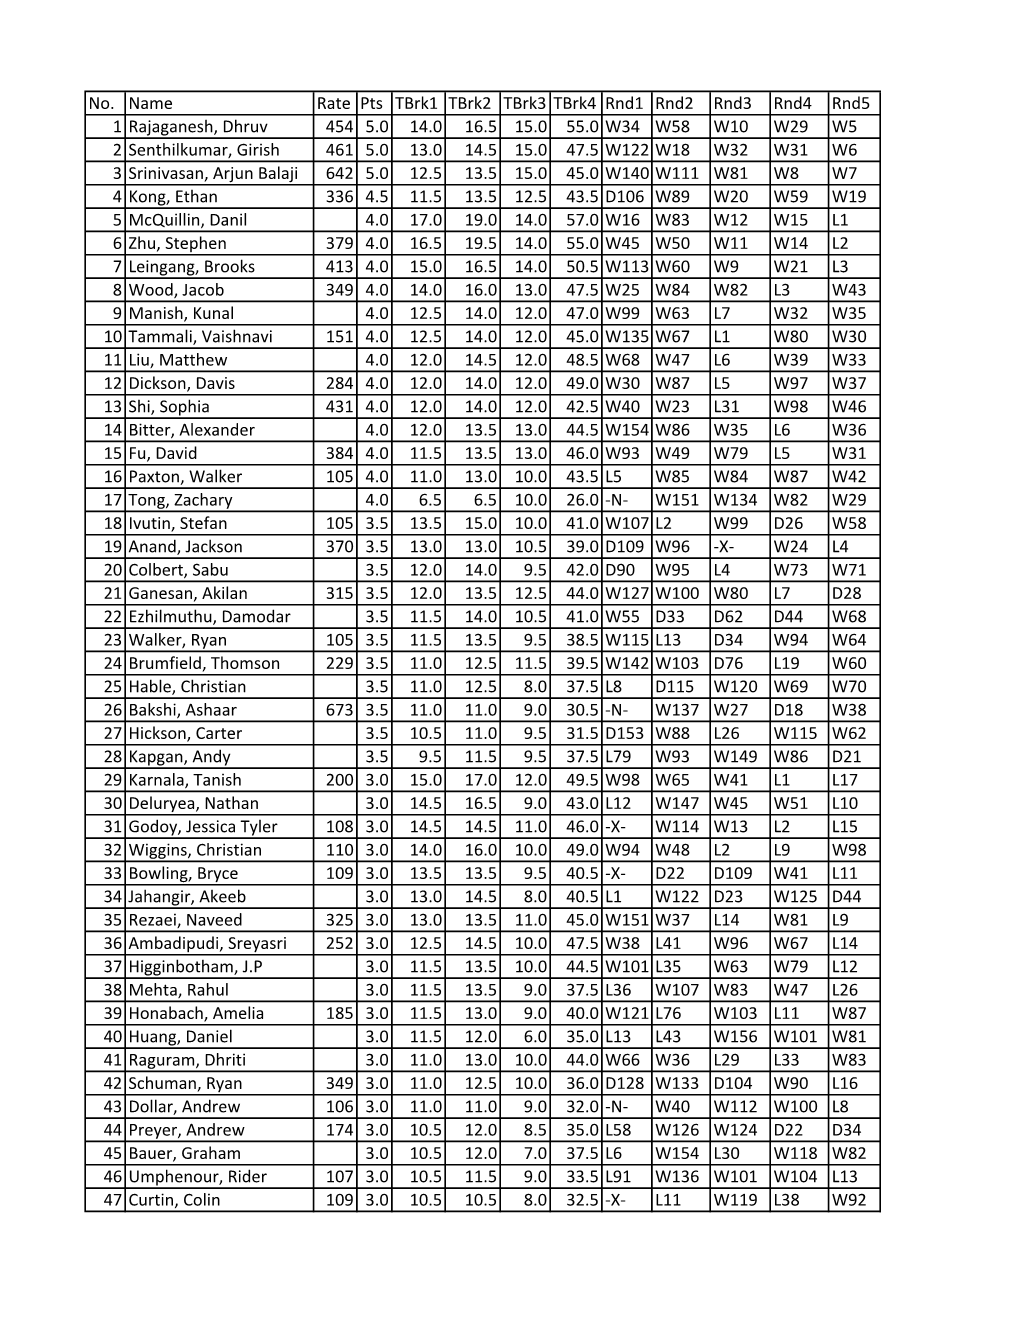 2013 Qualifier Standings